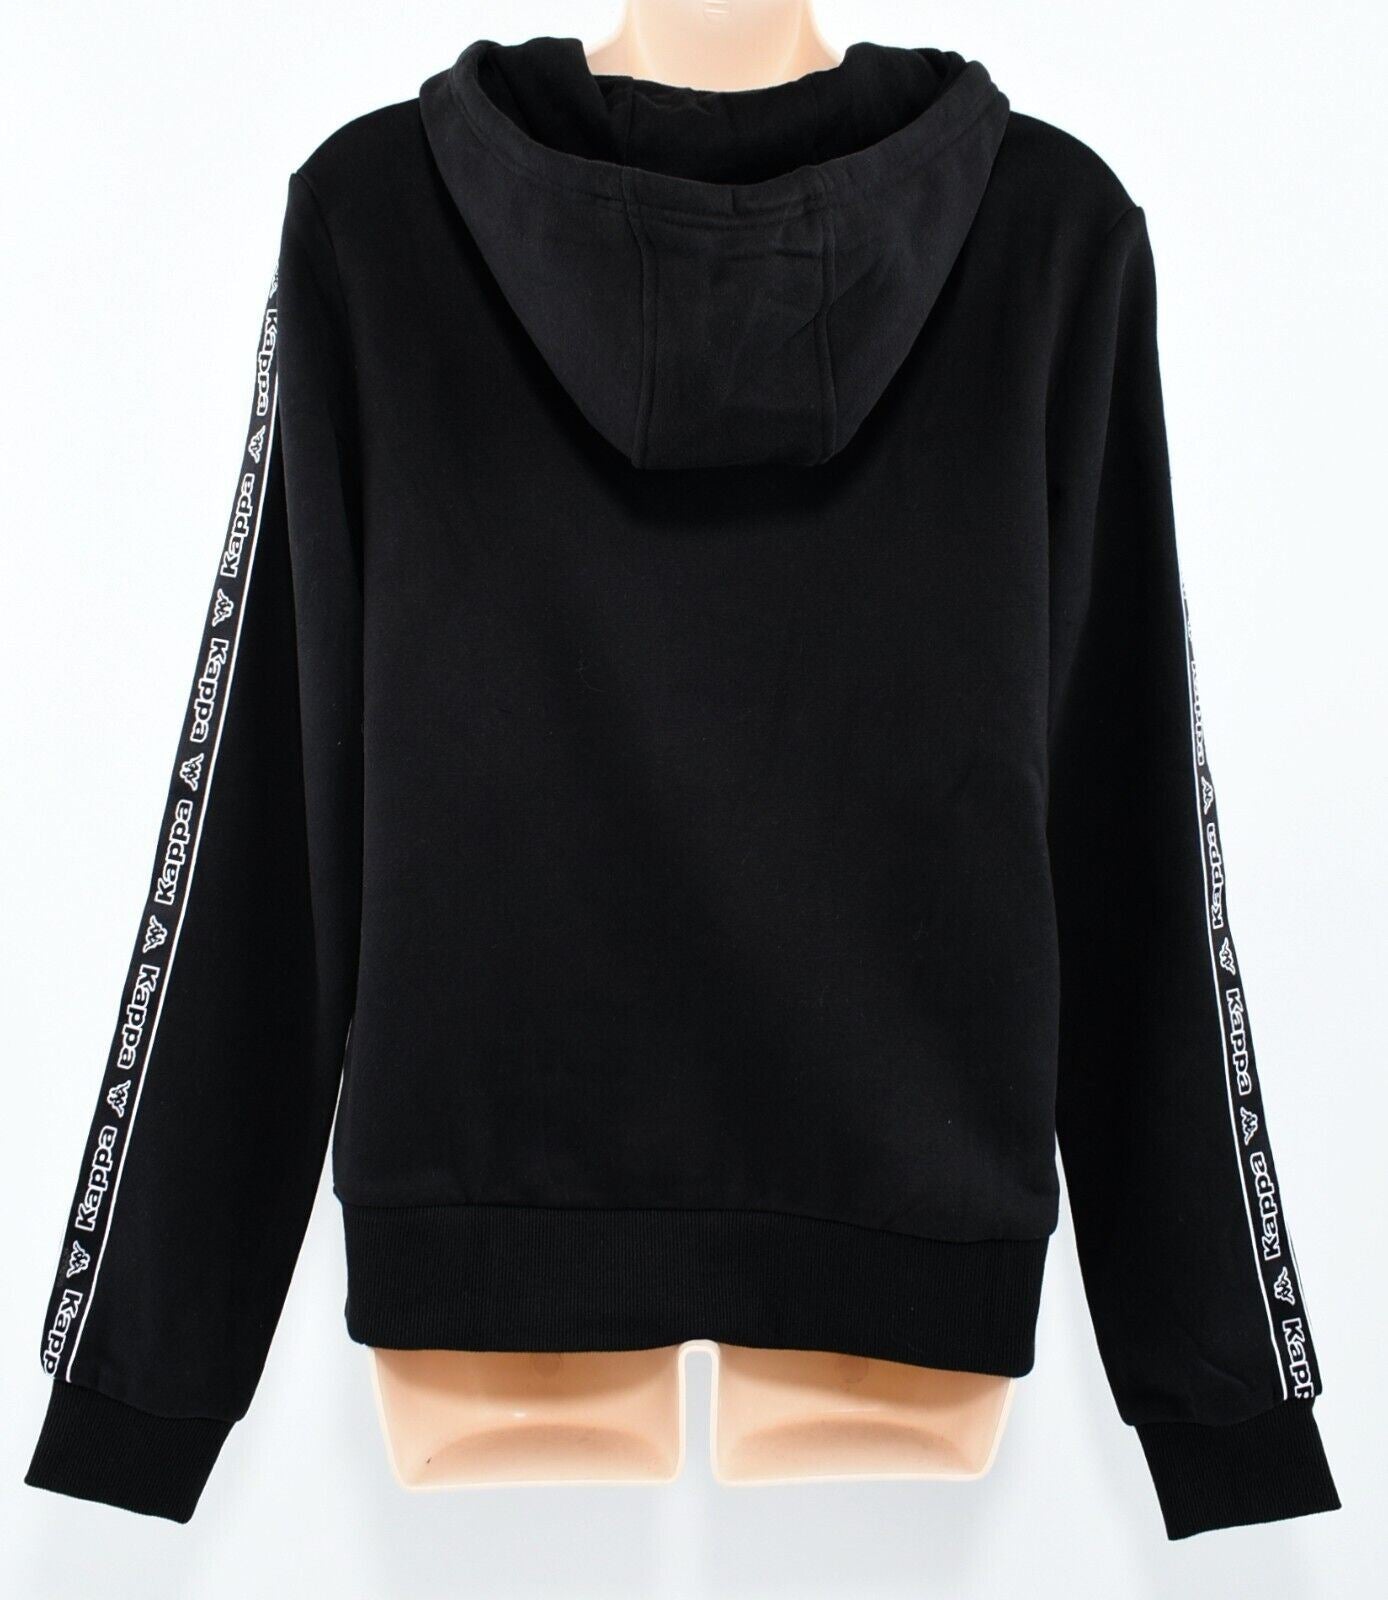 KAPPA Women's Full Zip Hoodie Jacket Sweatshirt, Black, size M (UK 12)